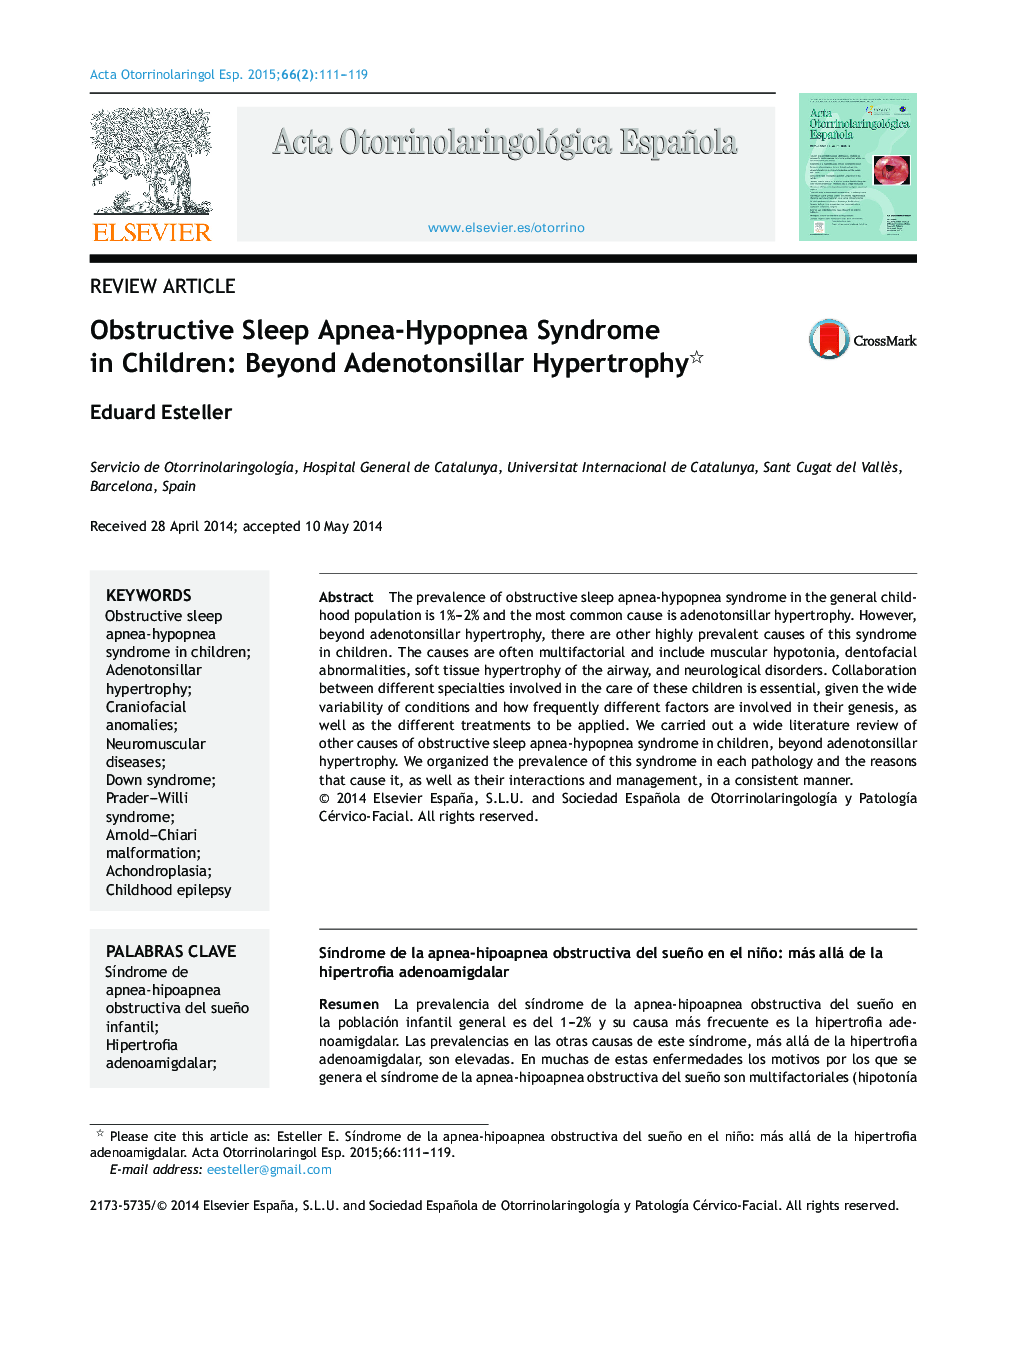 Obstructive Sleep Apnea-Hypopnea Syndrome in Children: Beyond Adenotonsillar Hypertrophy 